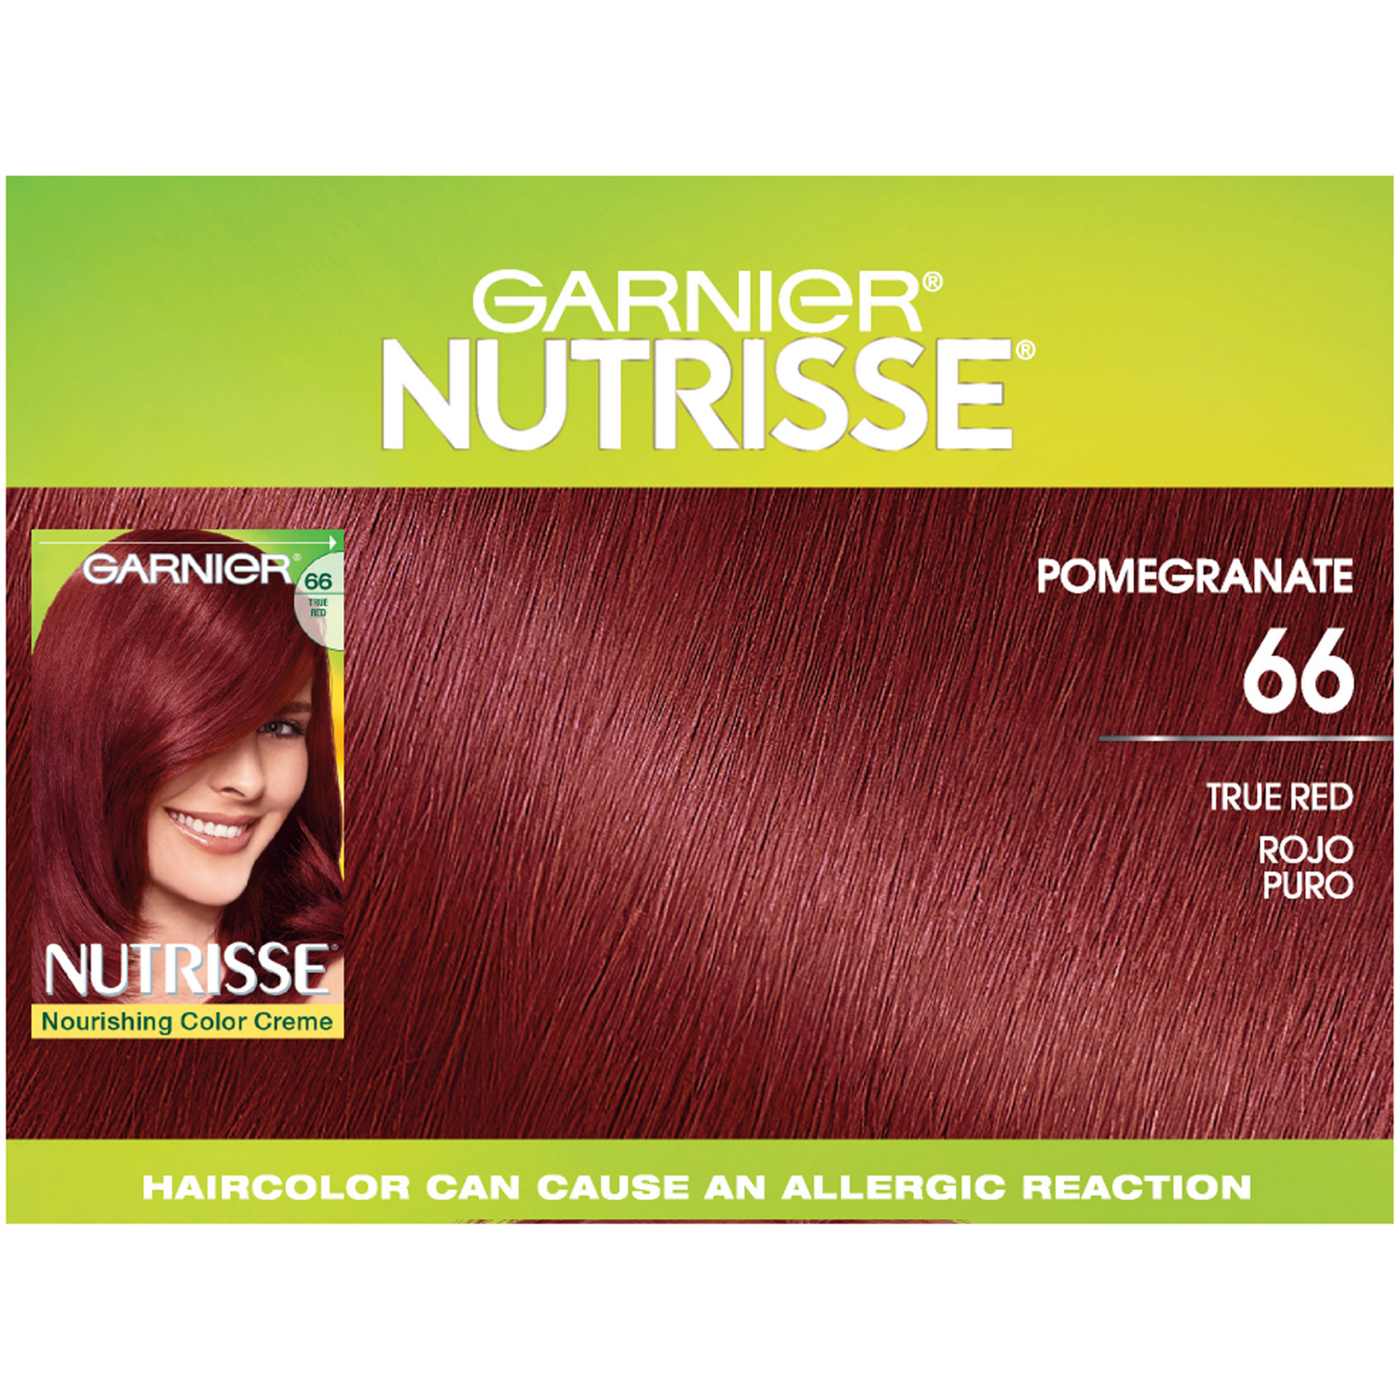 Garnier Nutrisse Nourishing Hair Color Crème - 66 True Red (Pomegranate); image 4 of 11